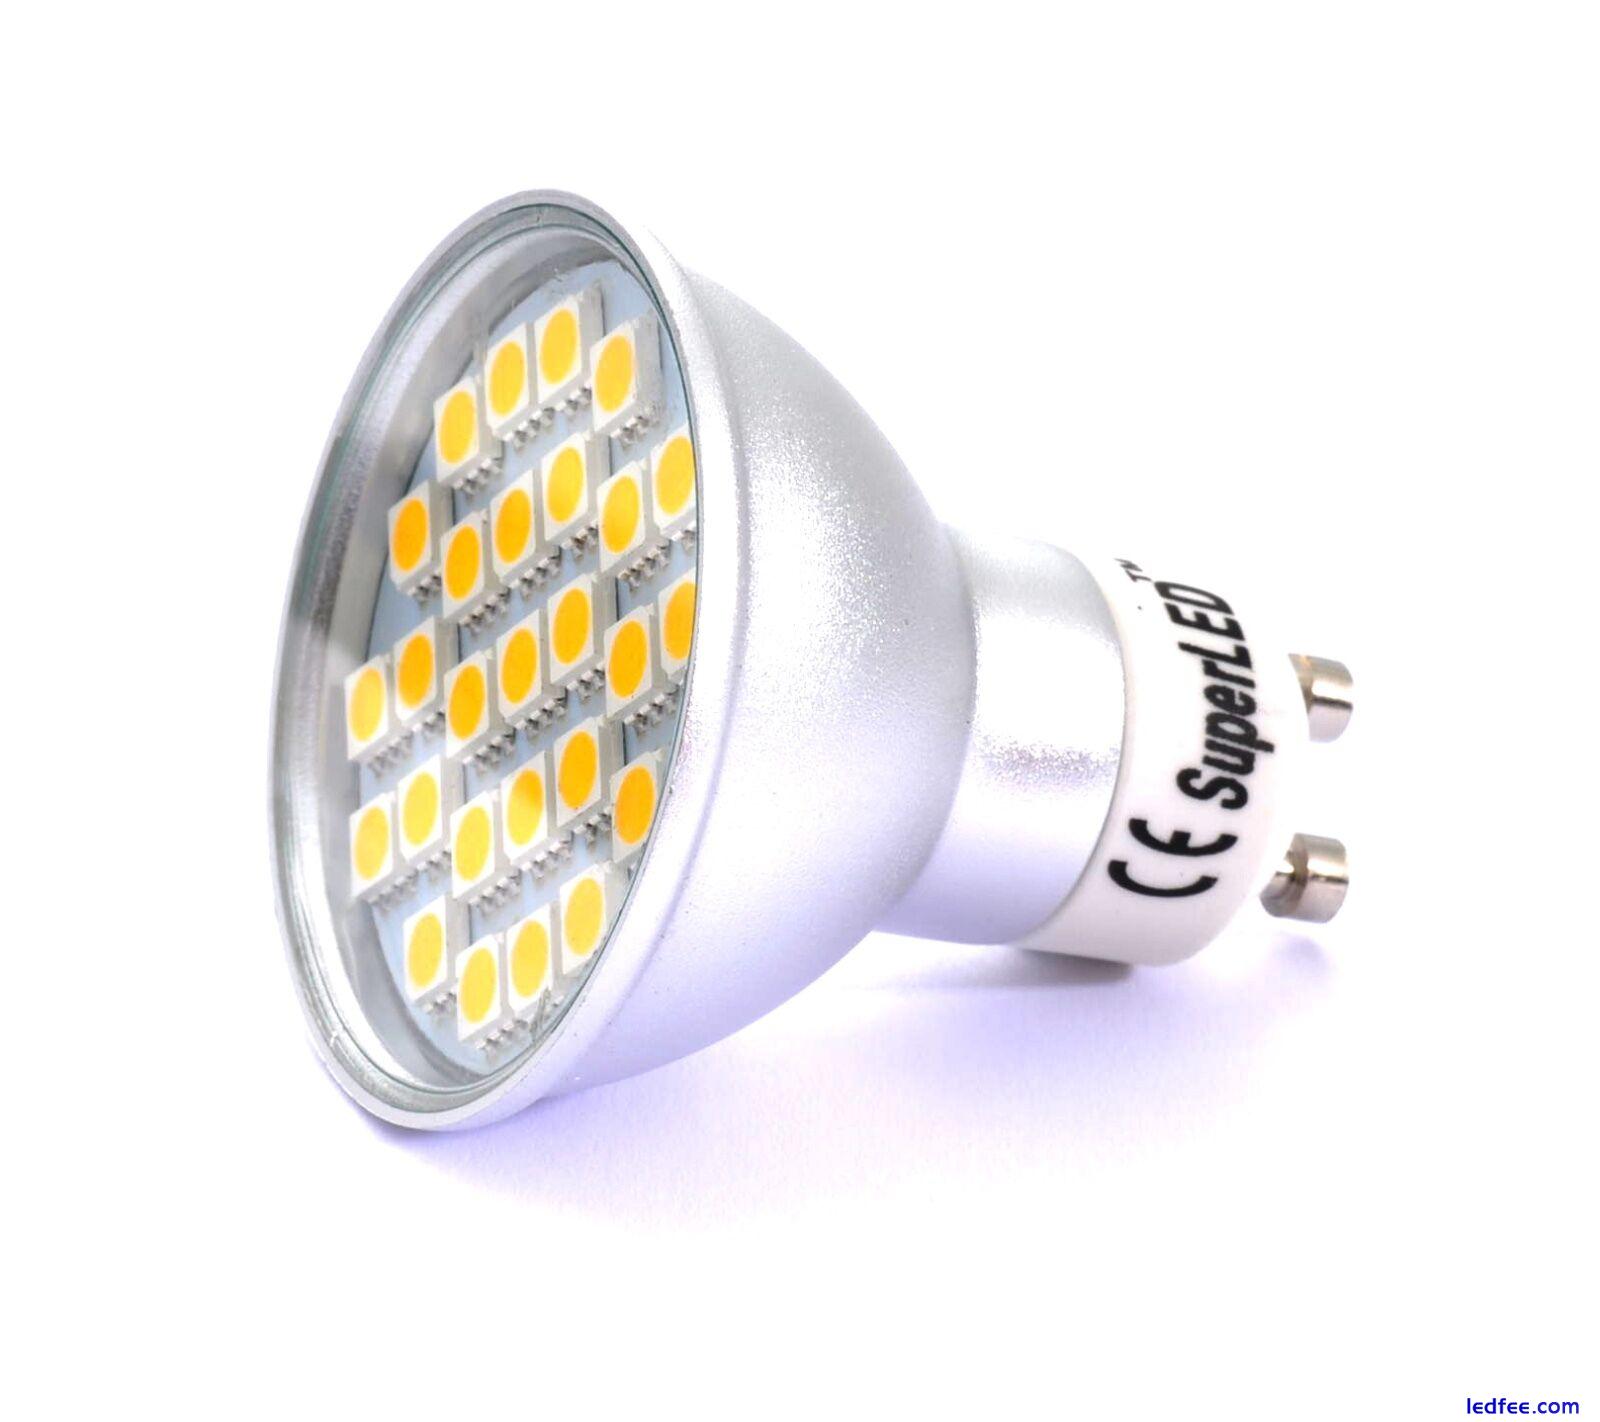 GU10 LED Dimmable & Non-Dimmable Spot Light Bulbs Warm White 5.5w 240V 460 Lumen 0 